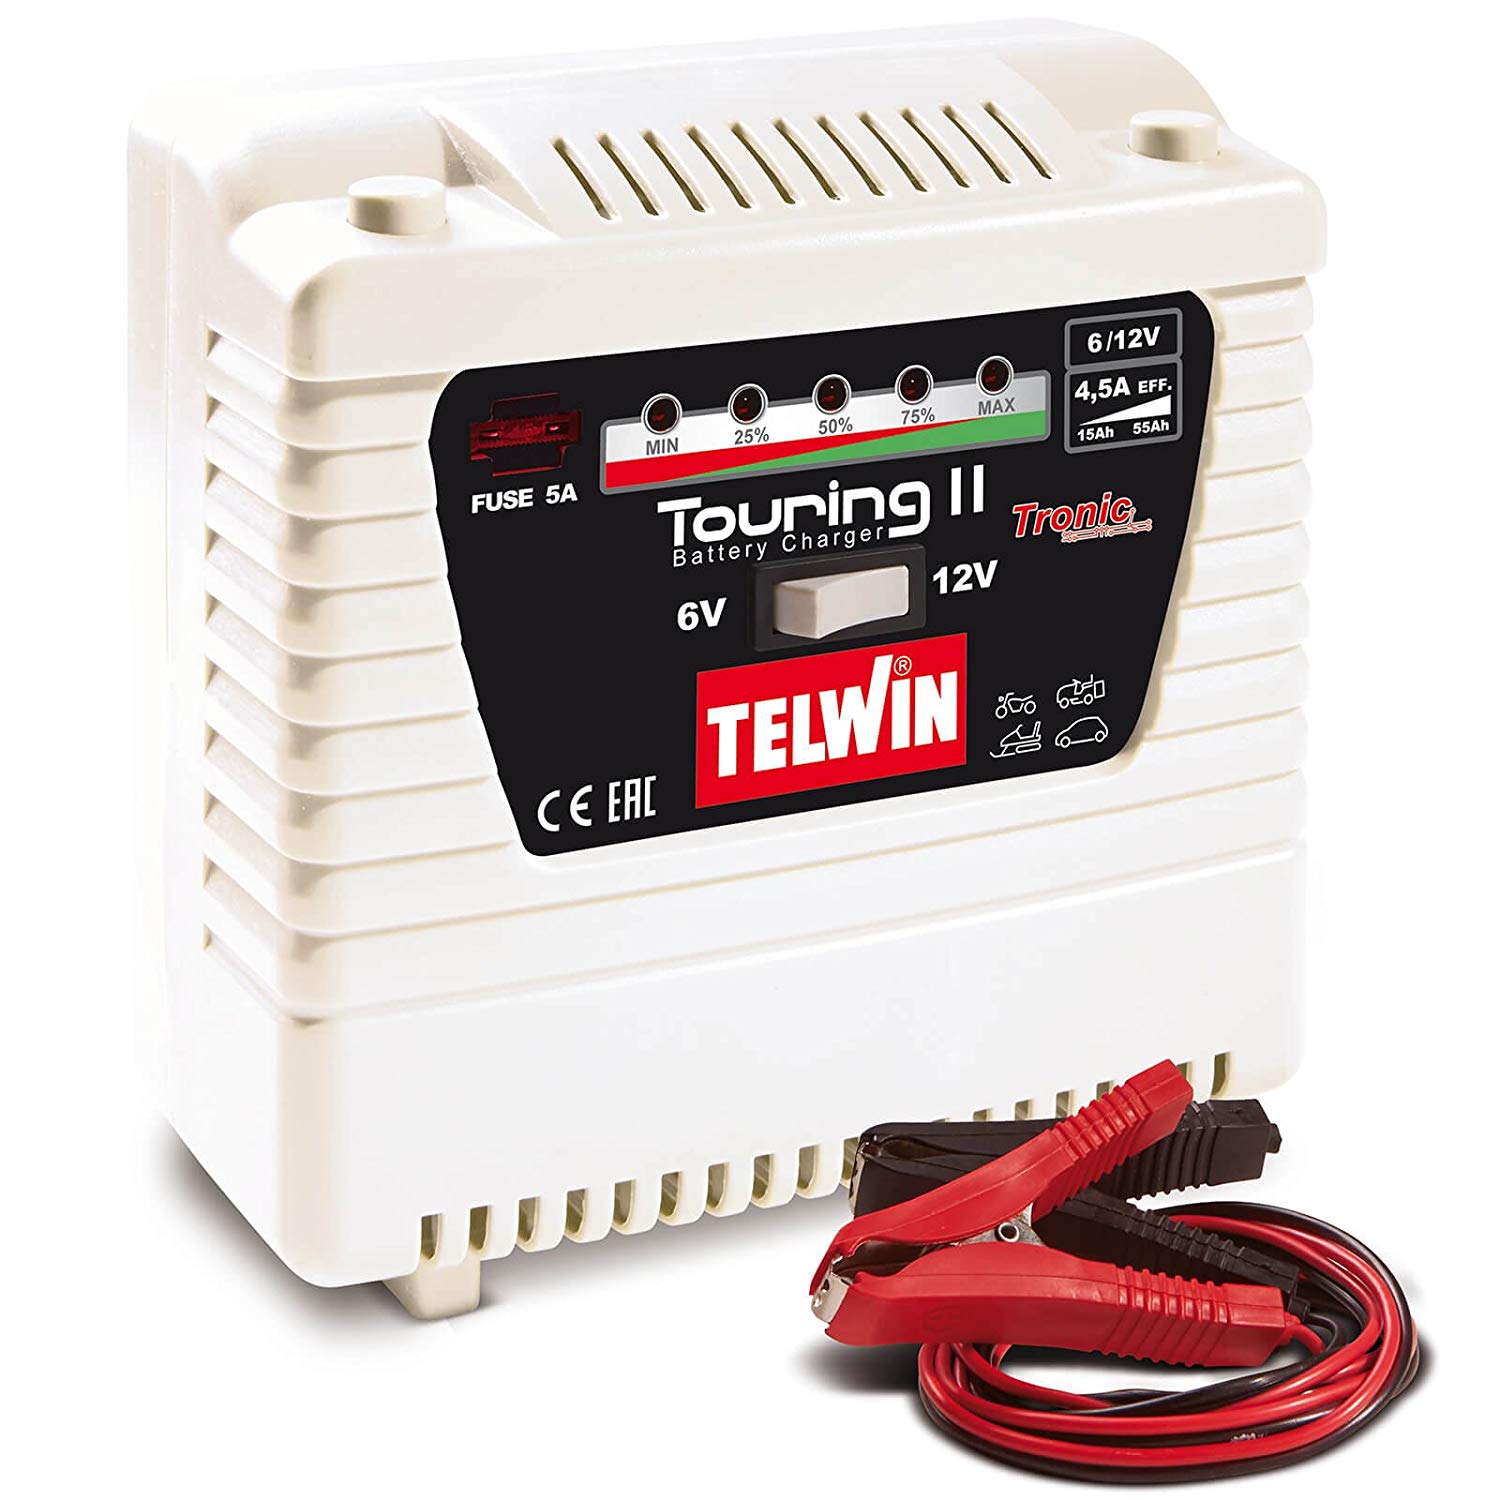 Telwin Elements TOURING 11 Autobatterie Ladegerät 6V/12V 4,5 A Ladestrom 55 Ah von TELWIN